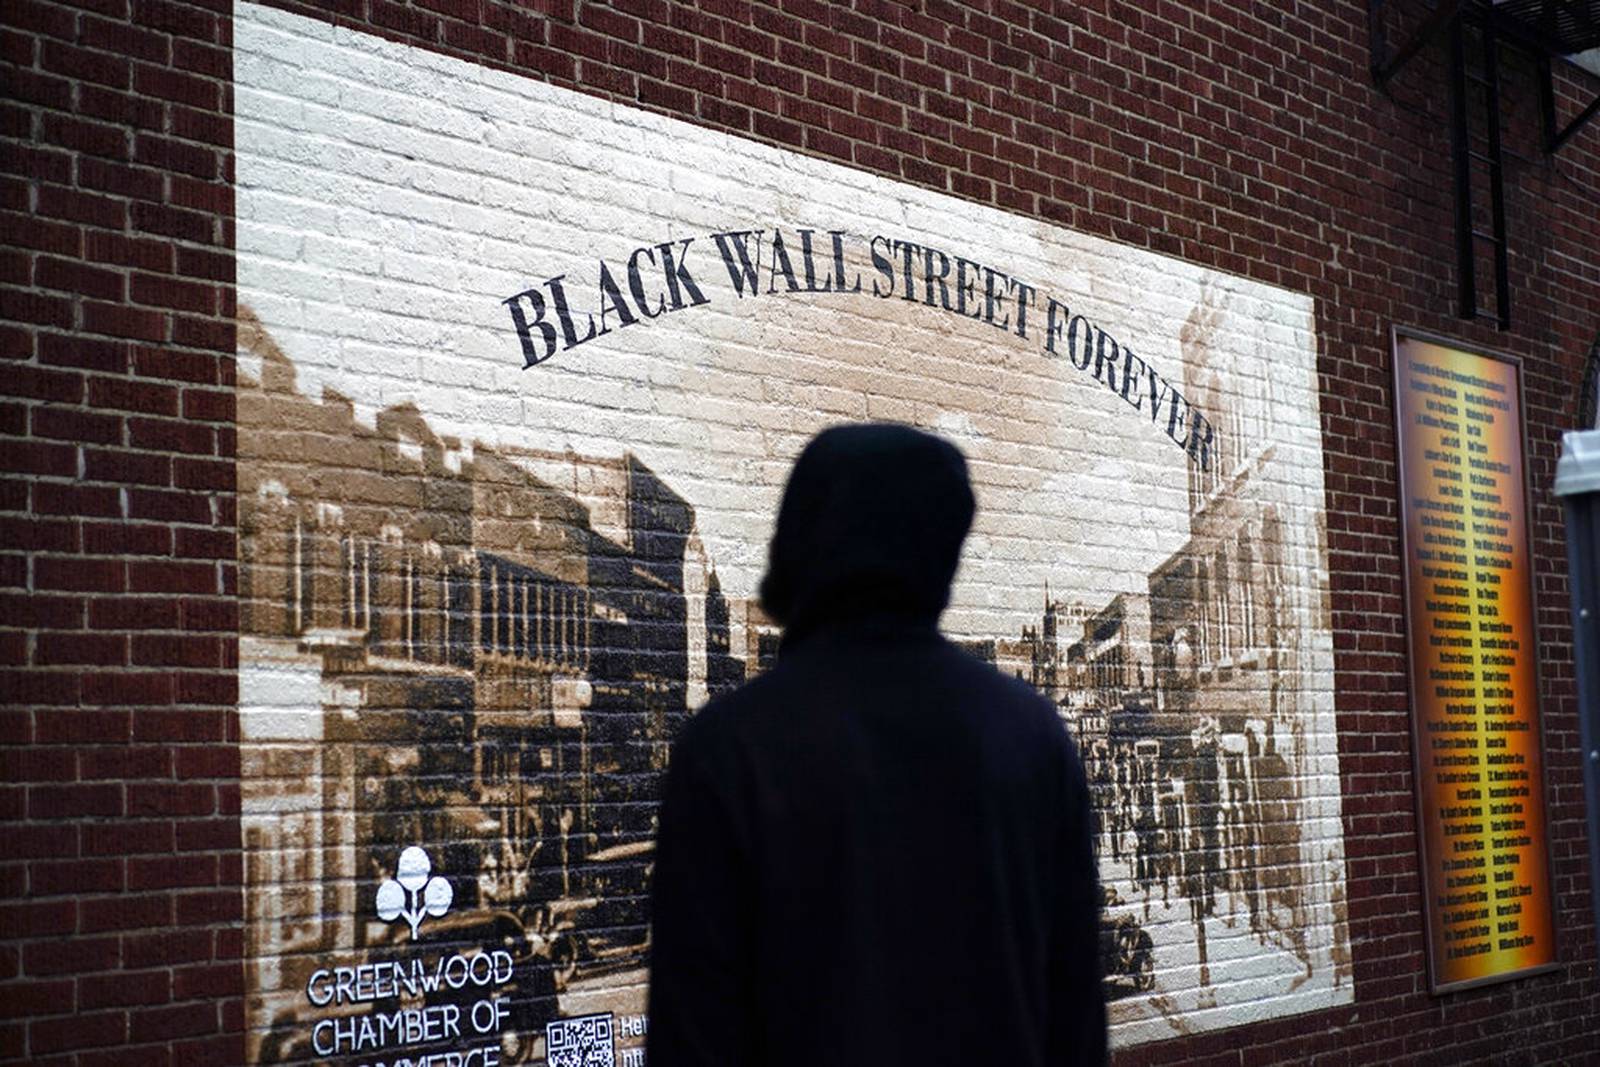 Remembering Black Wall Street, Tulsa Race Massacre 100 years later